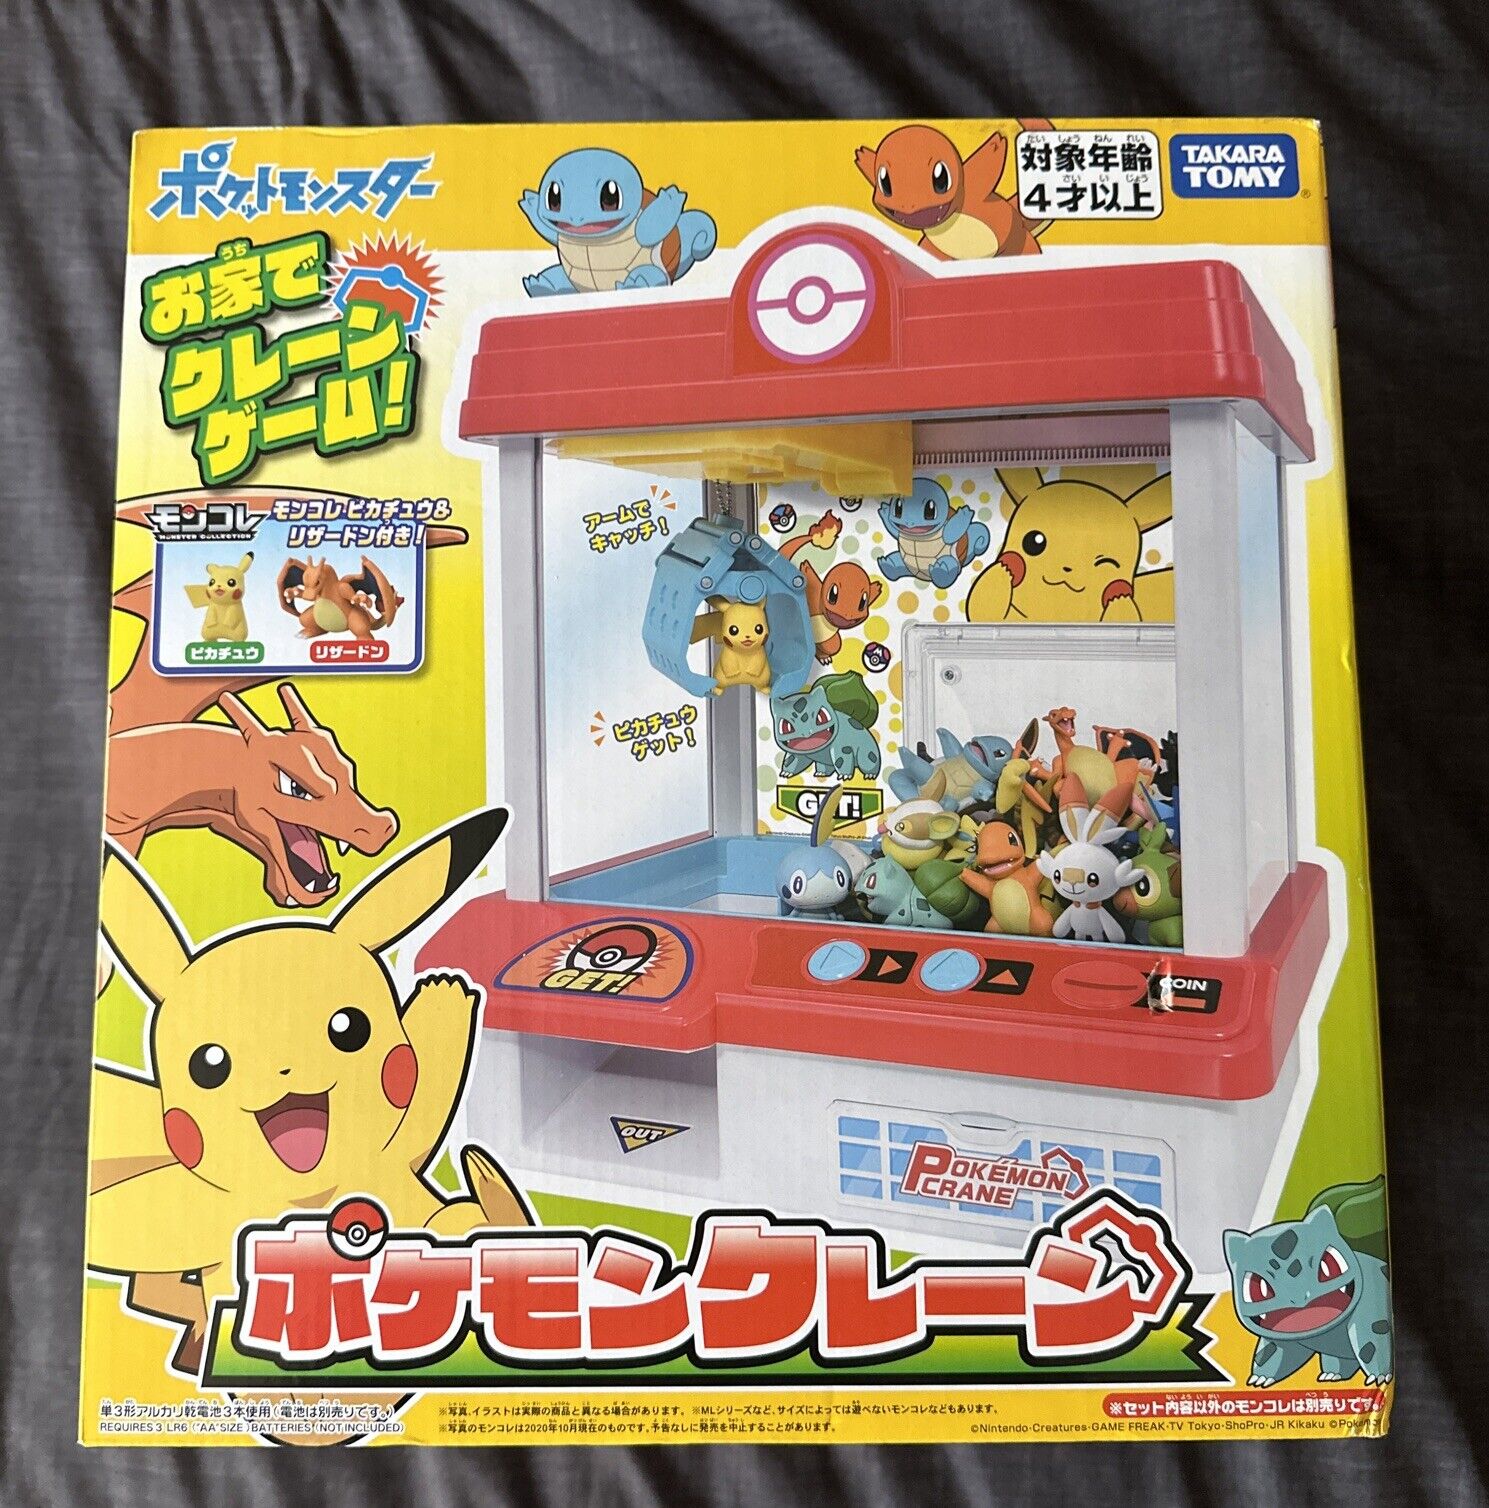 TOMY Pokemon Crane Game Machine with Mini Figures Included - Pikachu Charizard